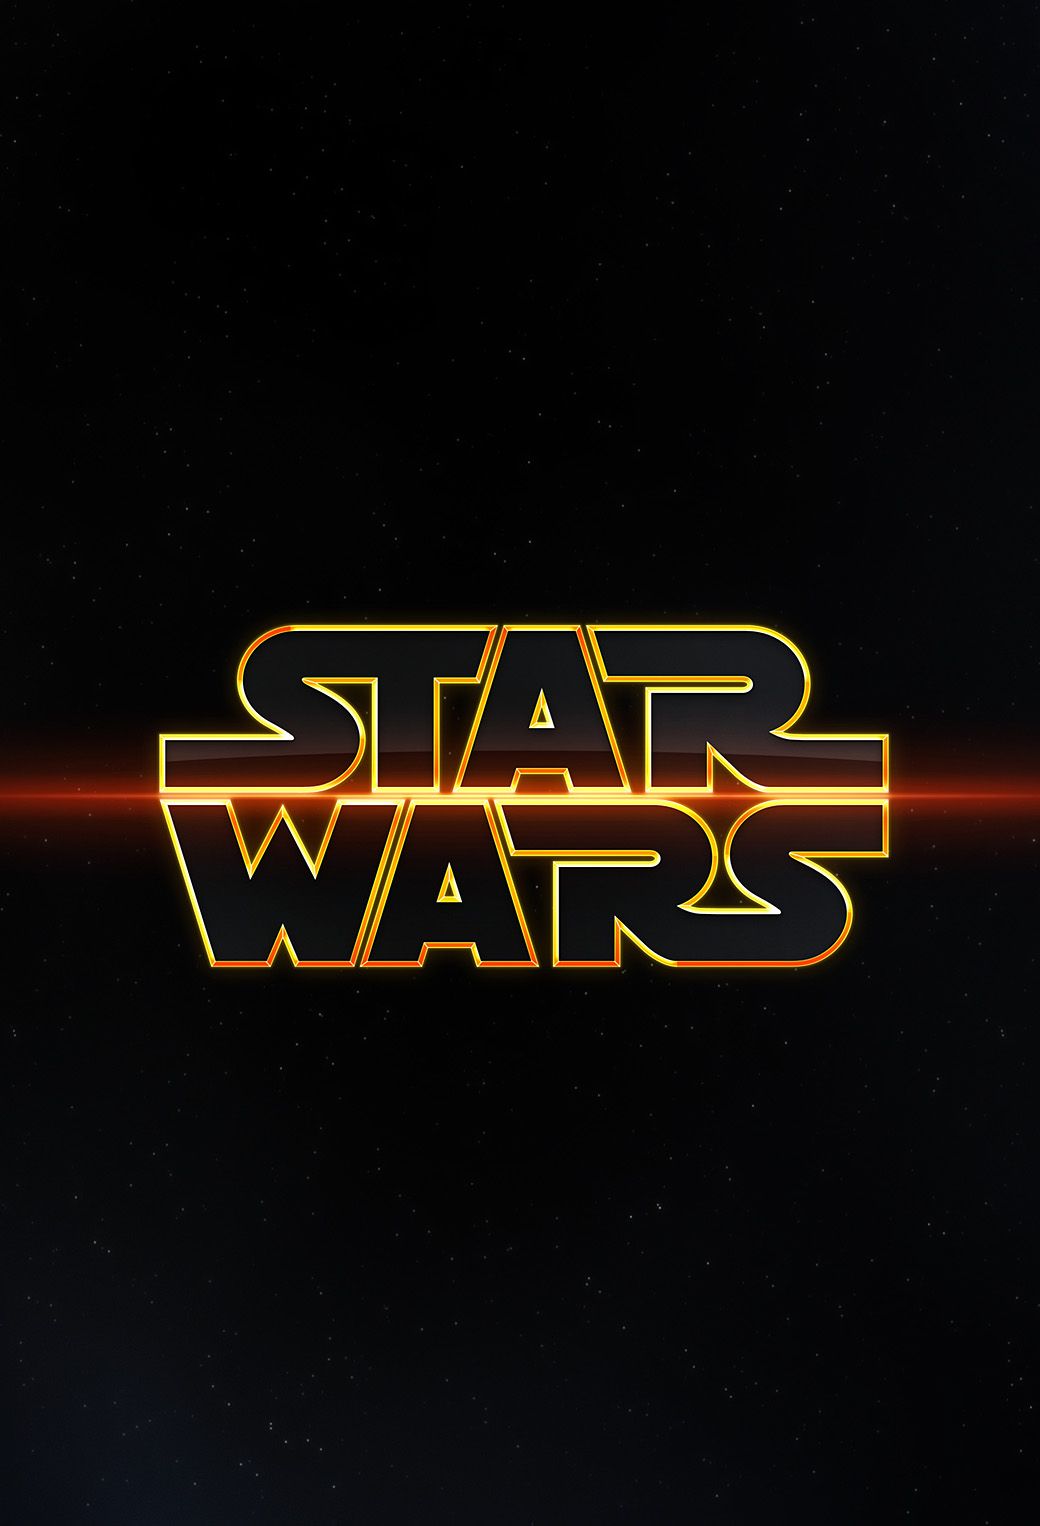 star wars logo wallpaper,text,font,logo,games,graphics